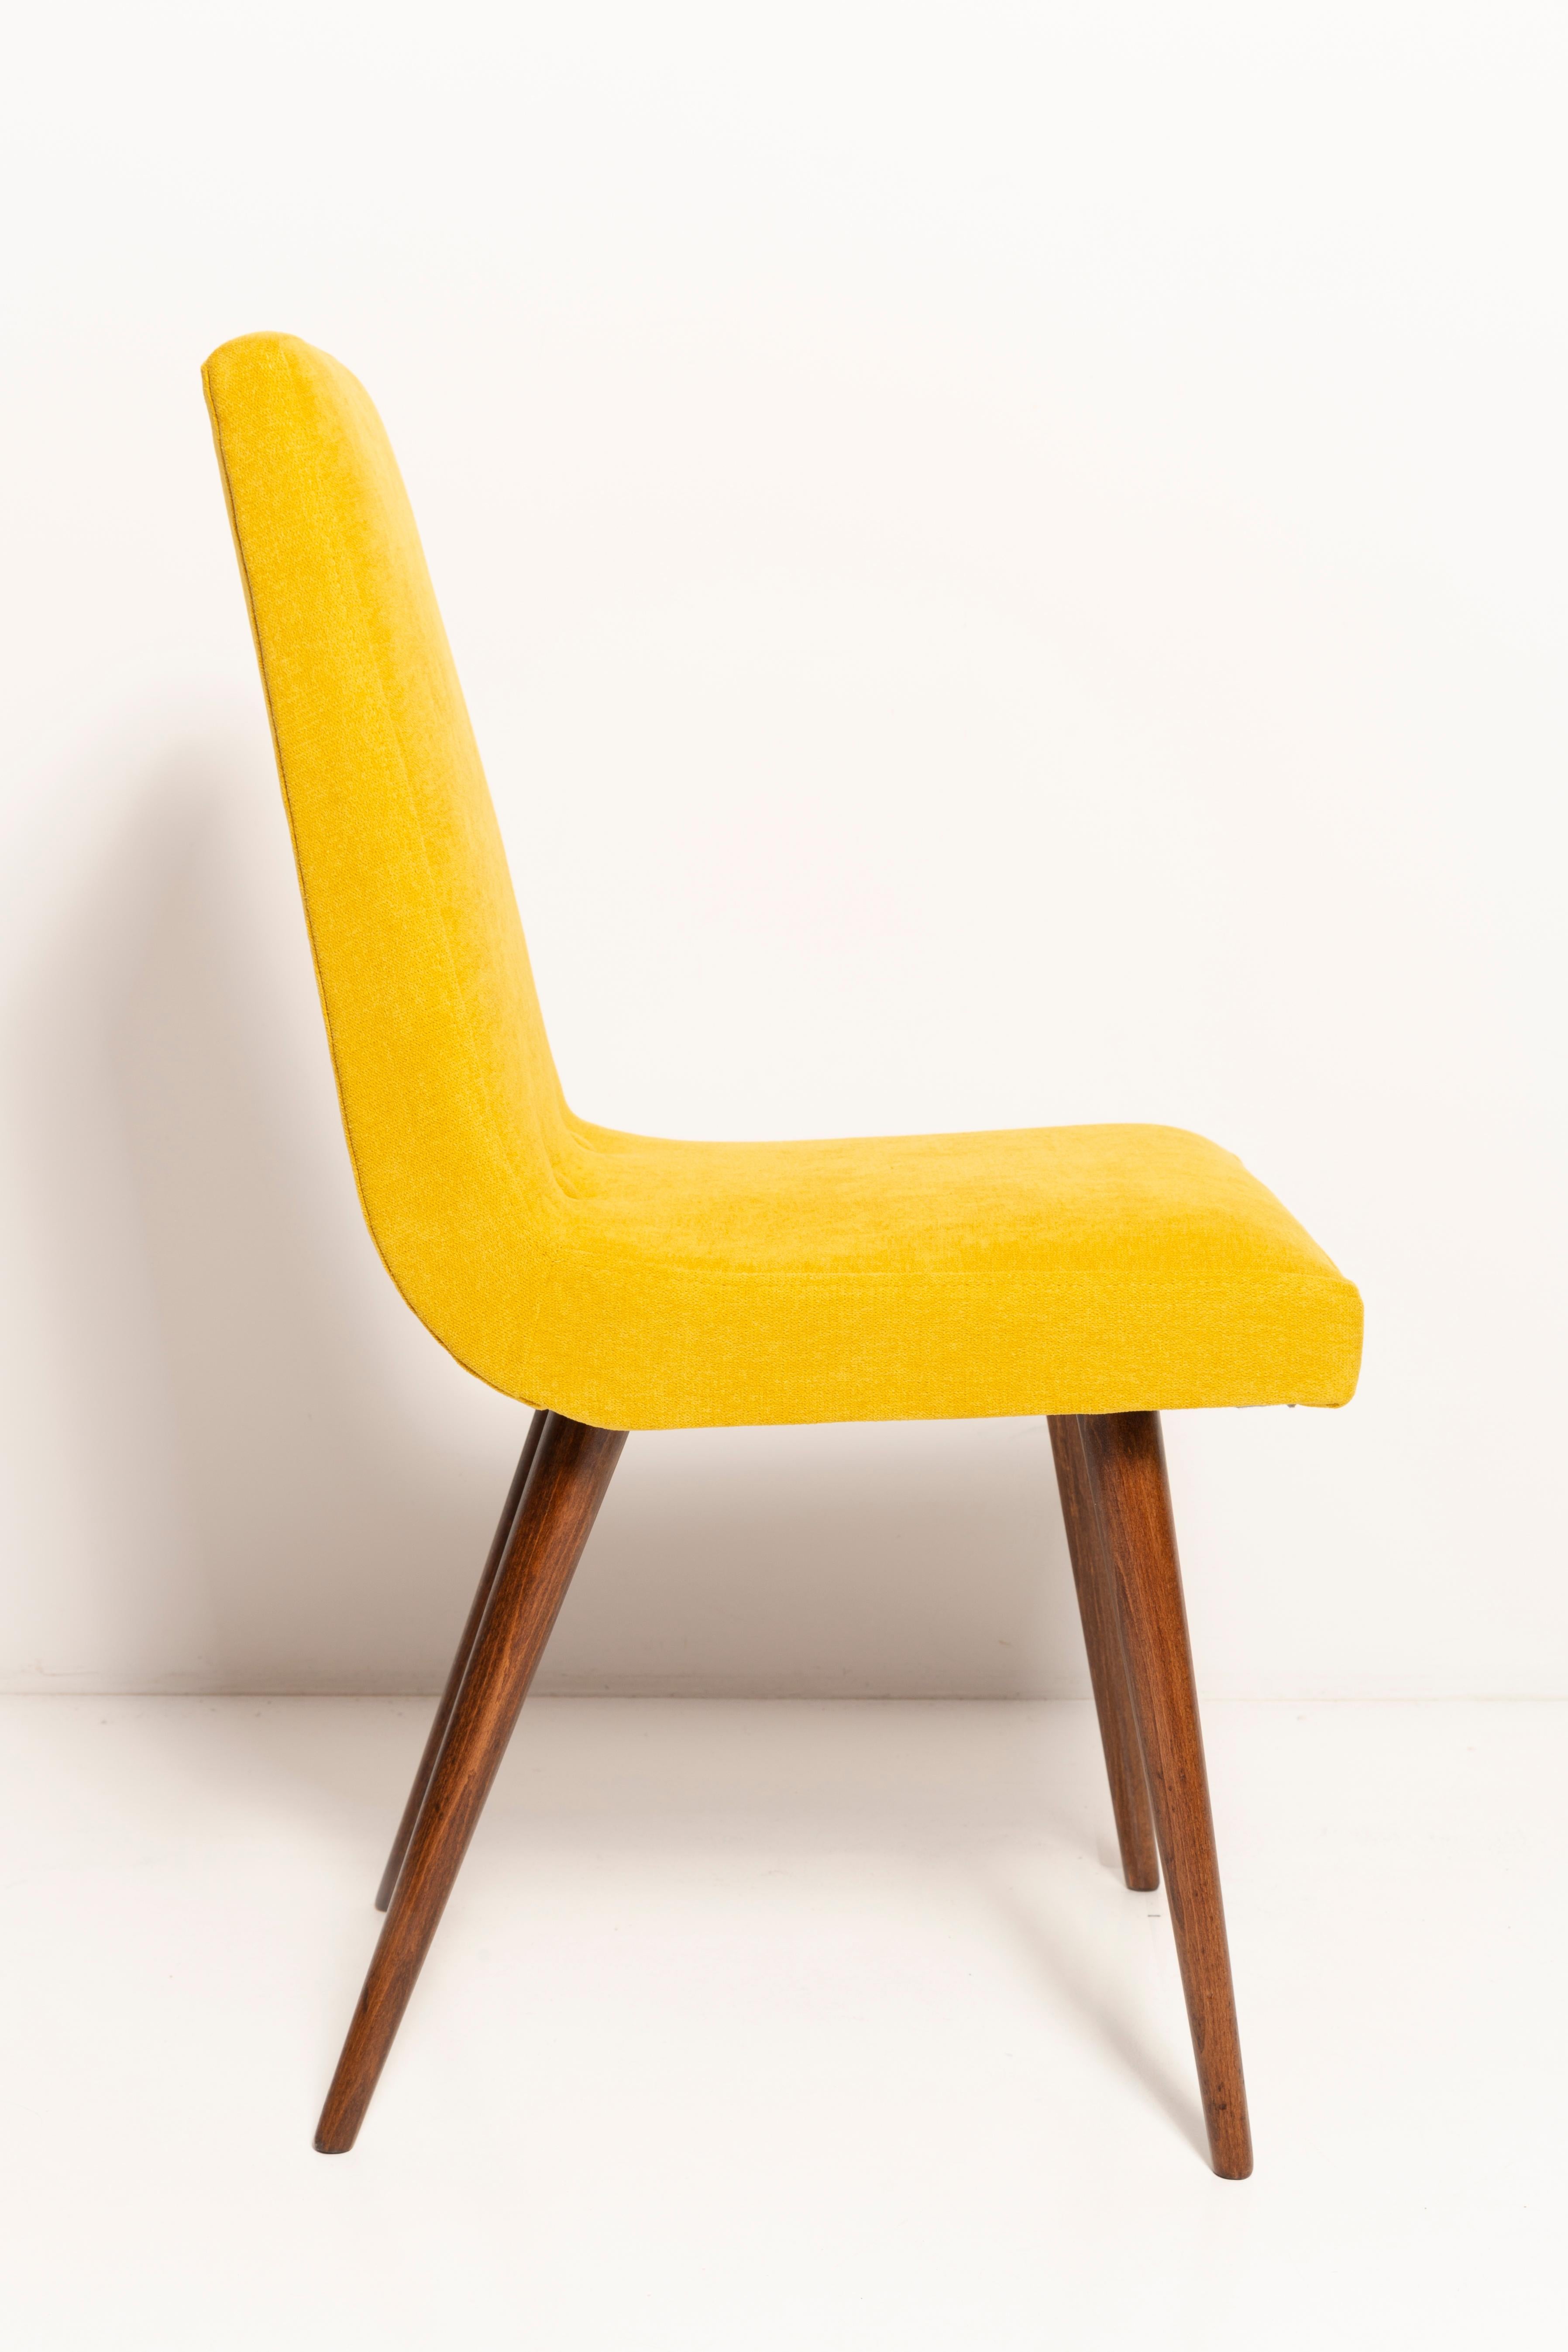 Polish Set of Four 20th Century Mustard Yellow Wool Chair, Rajmund Halas Europe, 1960s For Sale